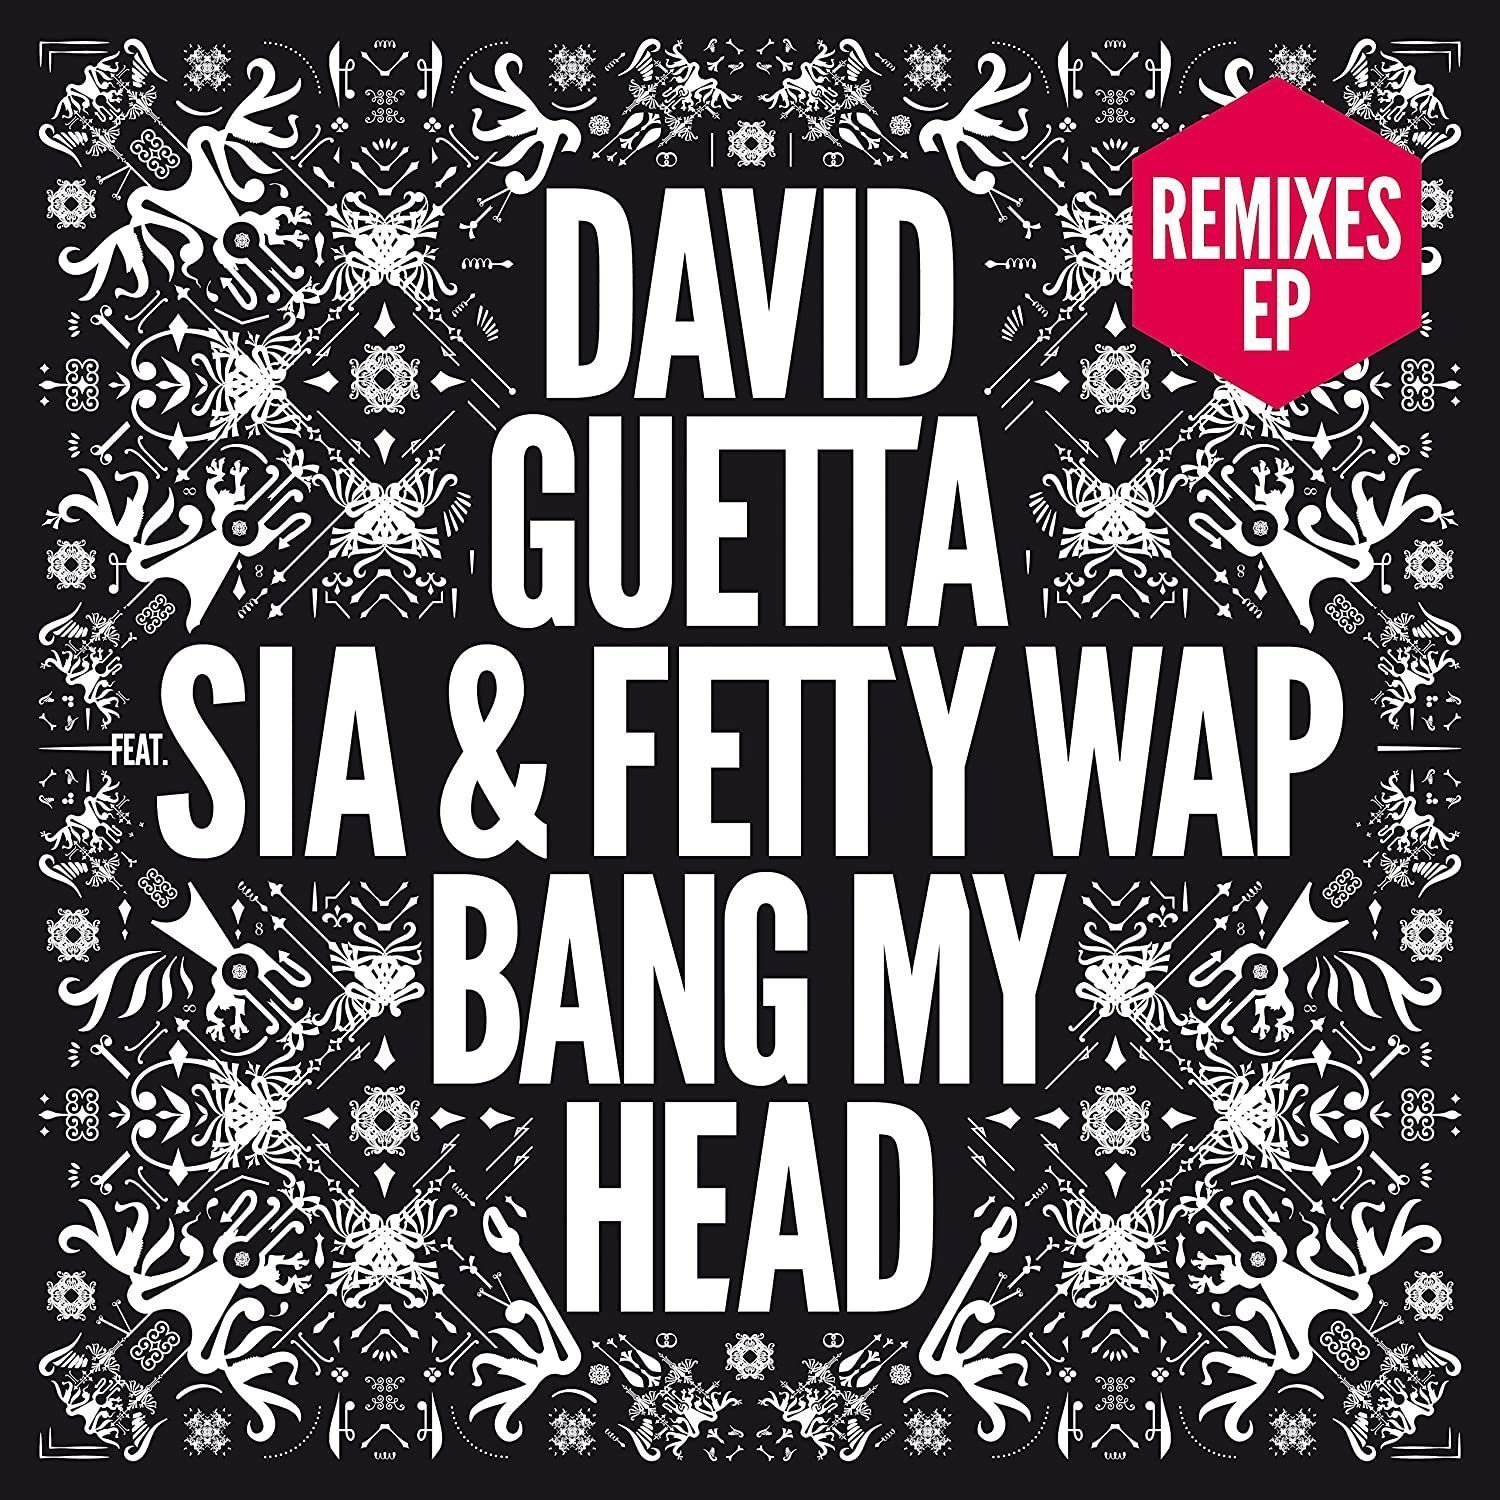 Disque vinyle David Guetta - Bang My Head (Feat. Sia & Fetty Wap) (LP)